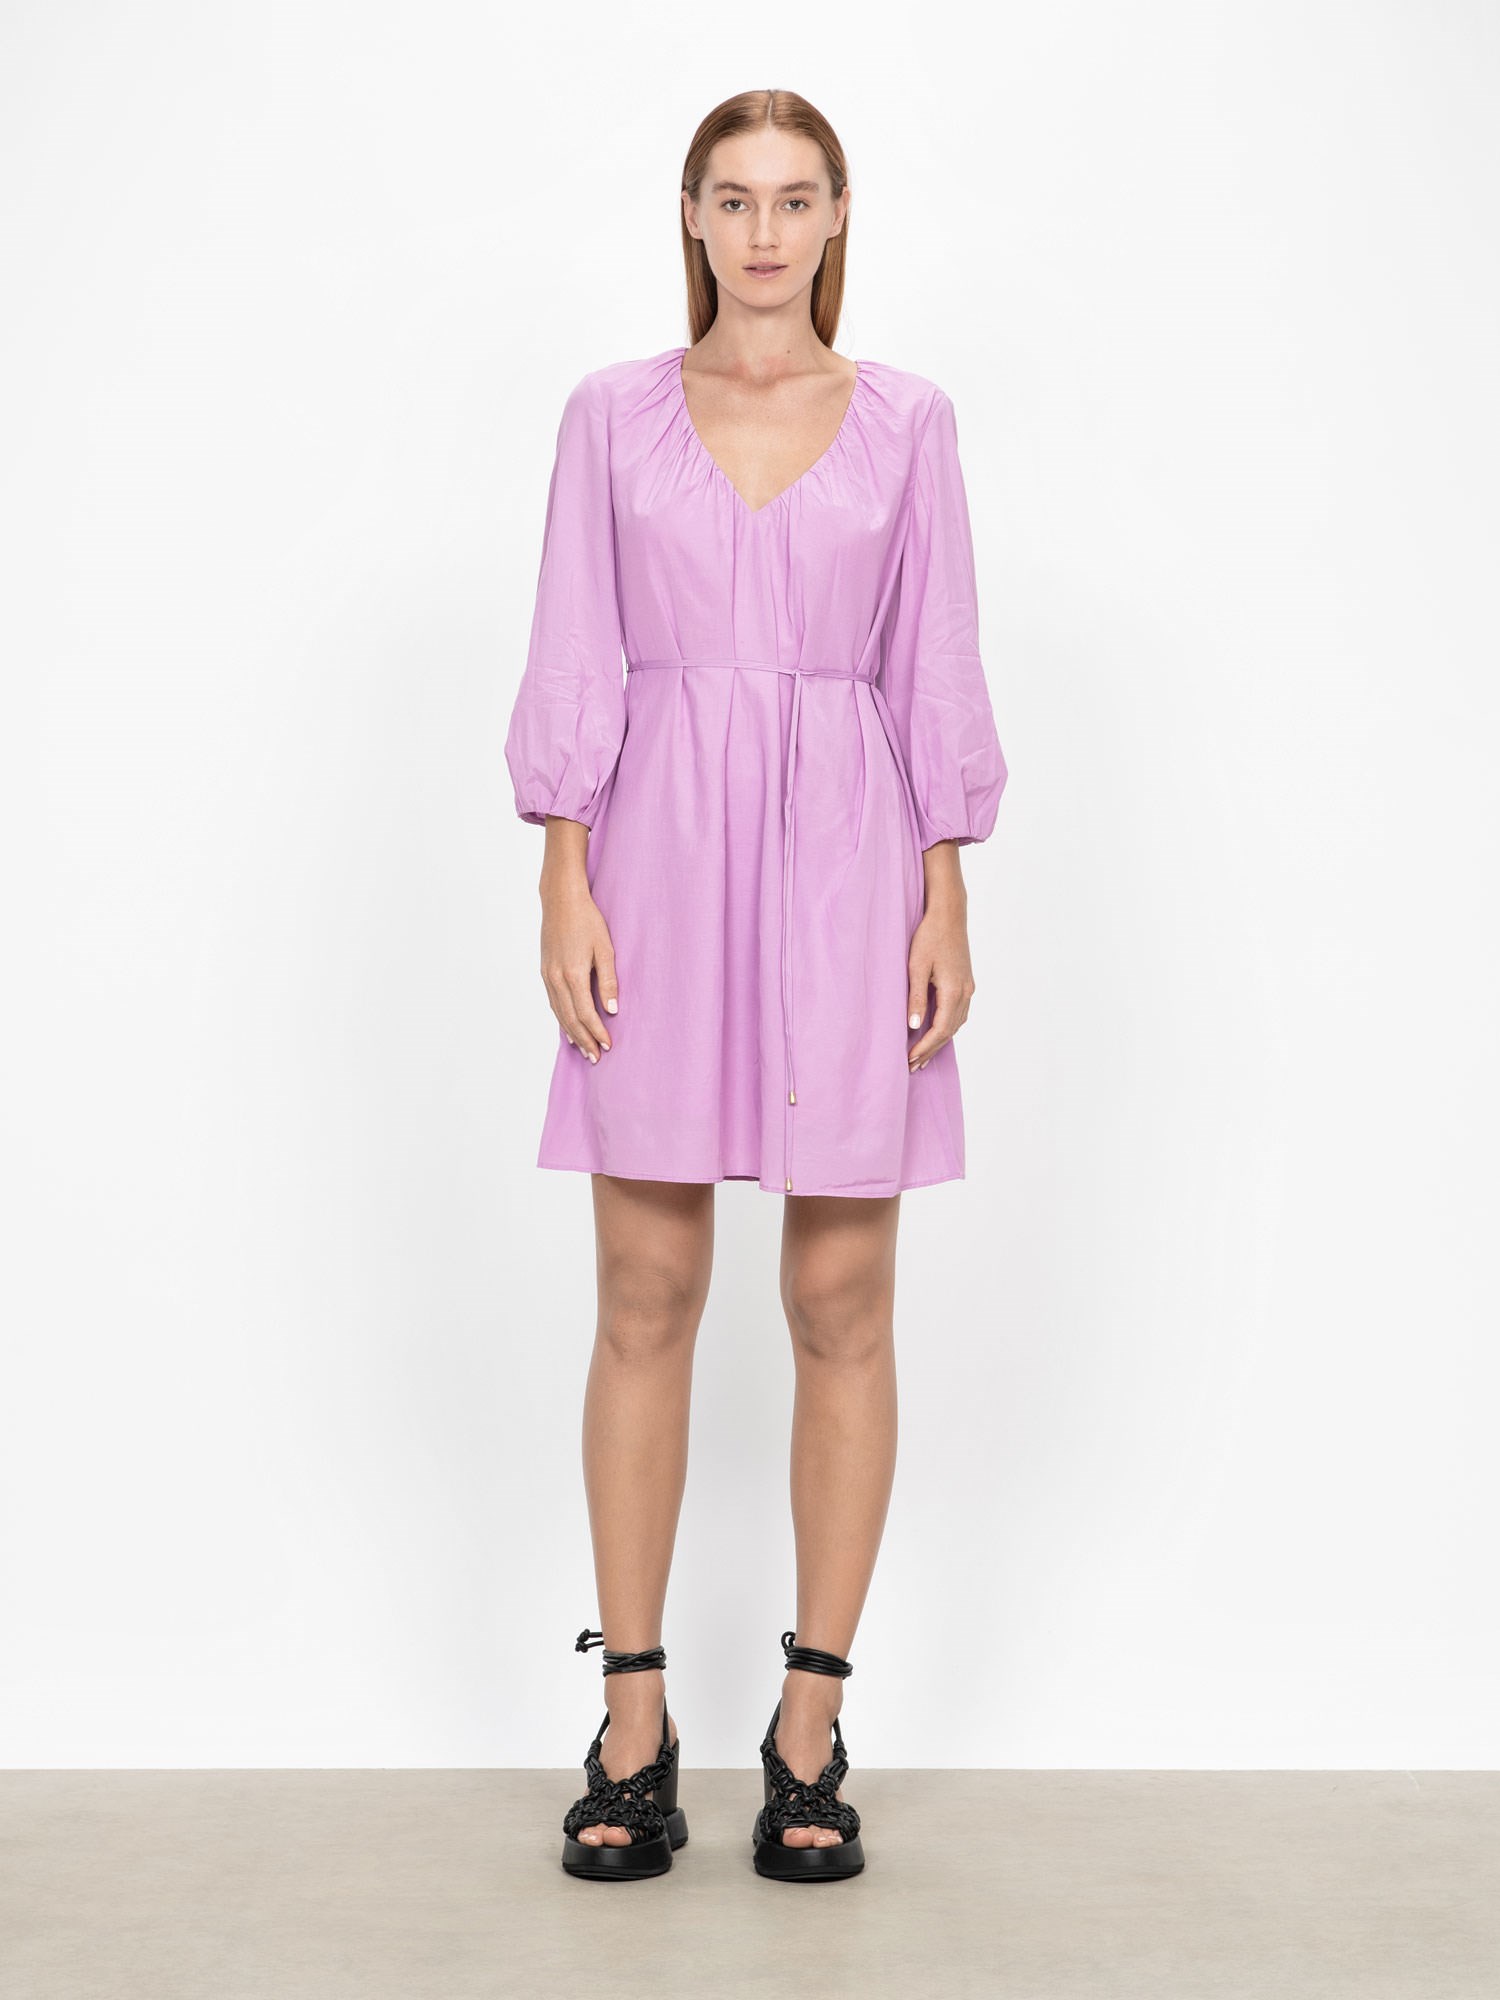 Silky Voile V Neck Dress | Buy Dresses Online - Veronika Maine